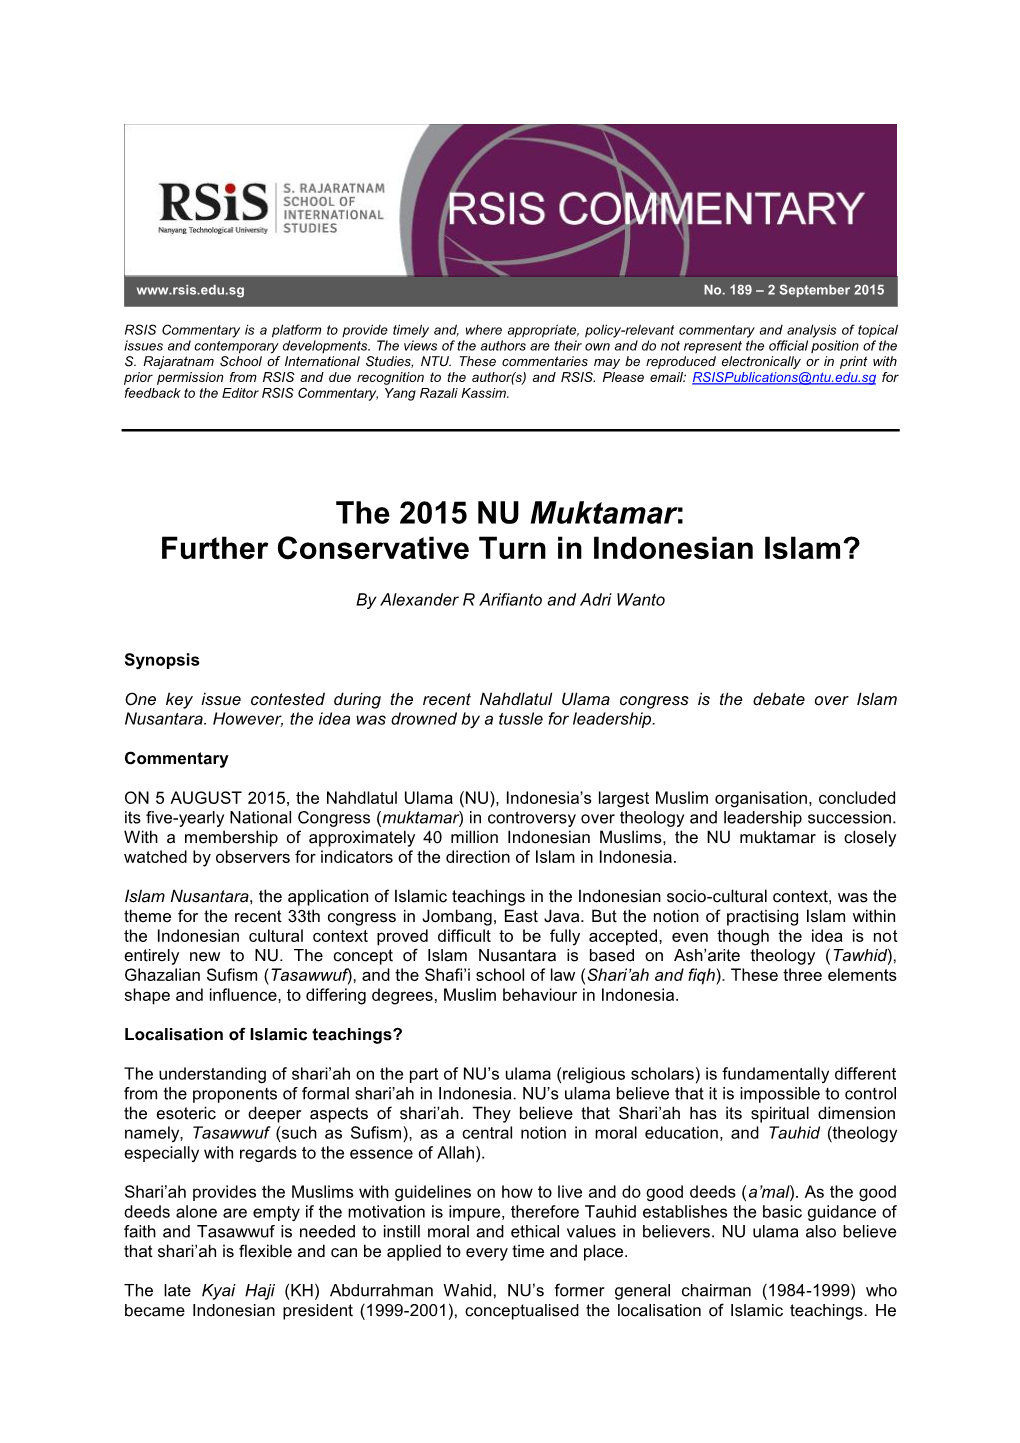 The 2015 NU Muktamar: Further Conservative Turn in Indonesian Islam?